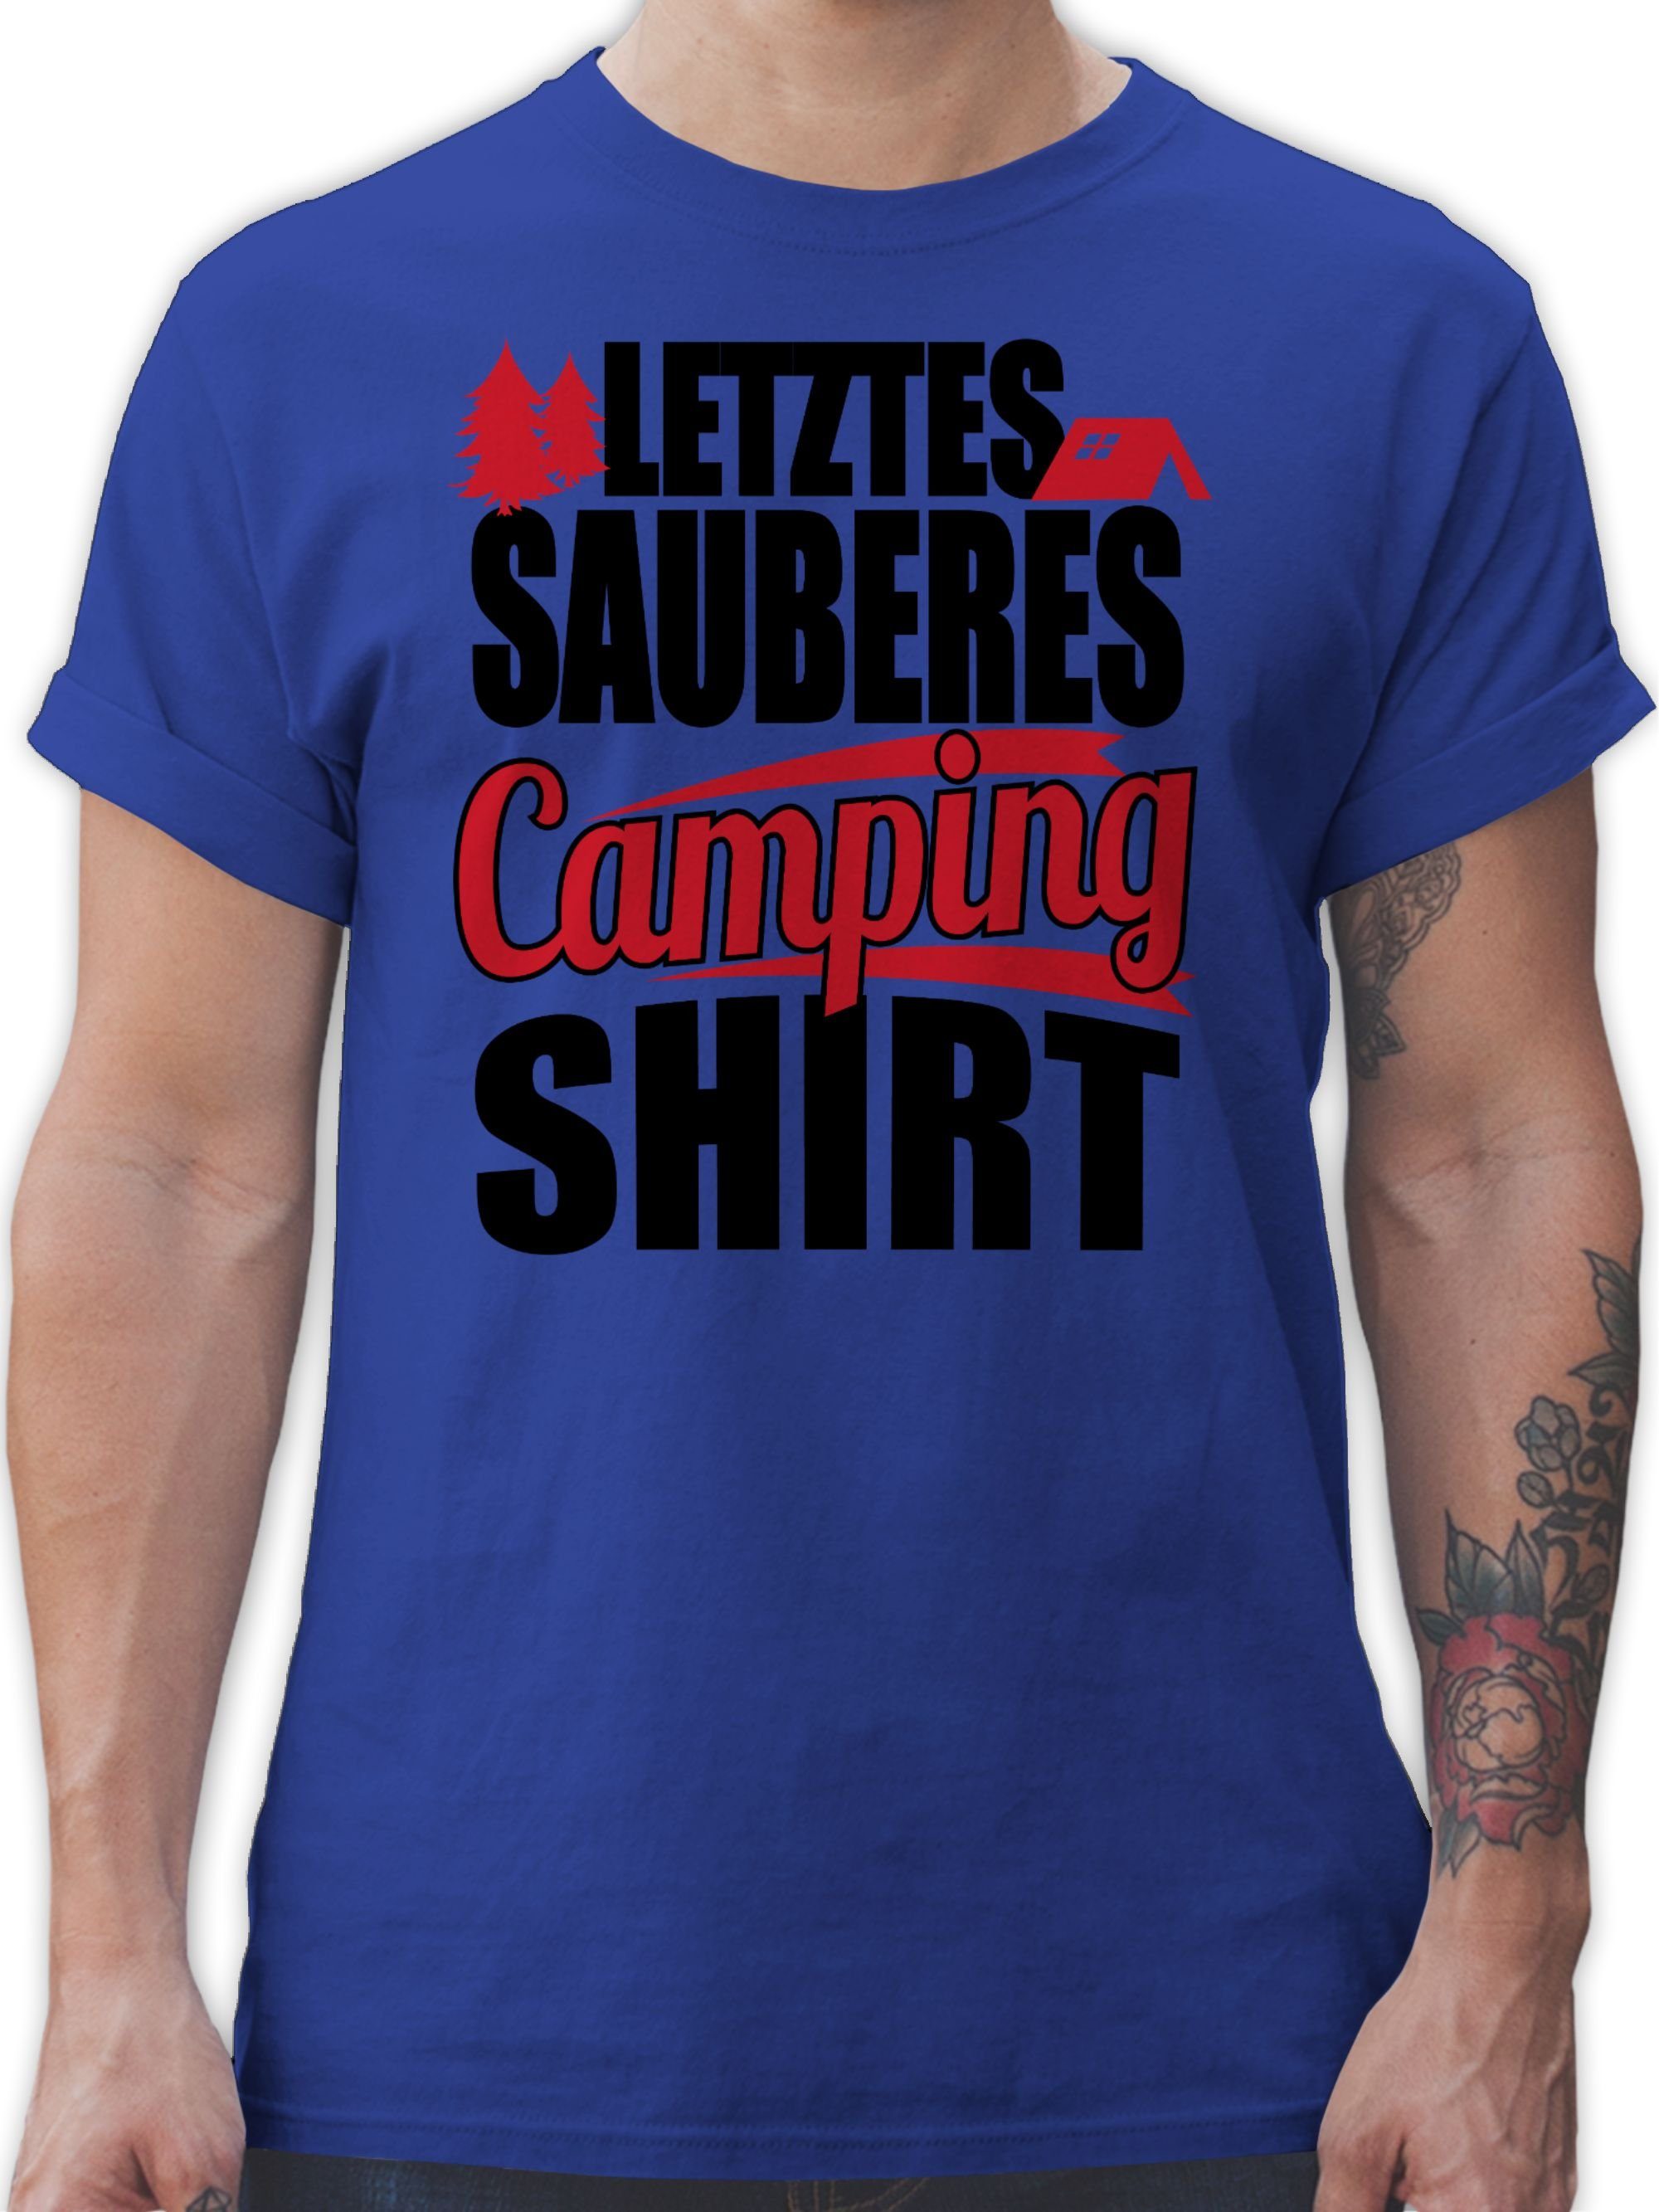 Shirtracer T-Shirt Letztes sauberes Camping Hobby Outfit 3 Royalblau schwarz Shirt